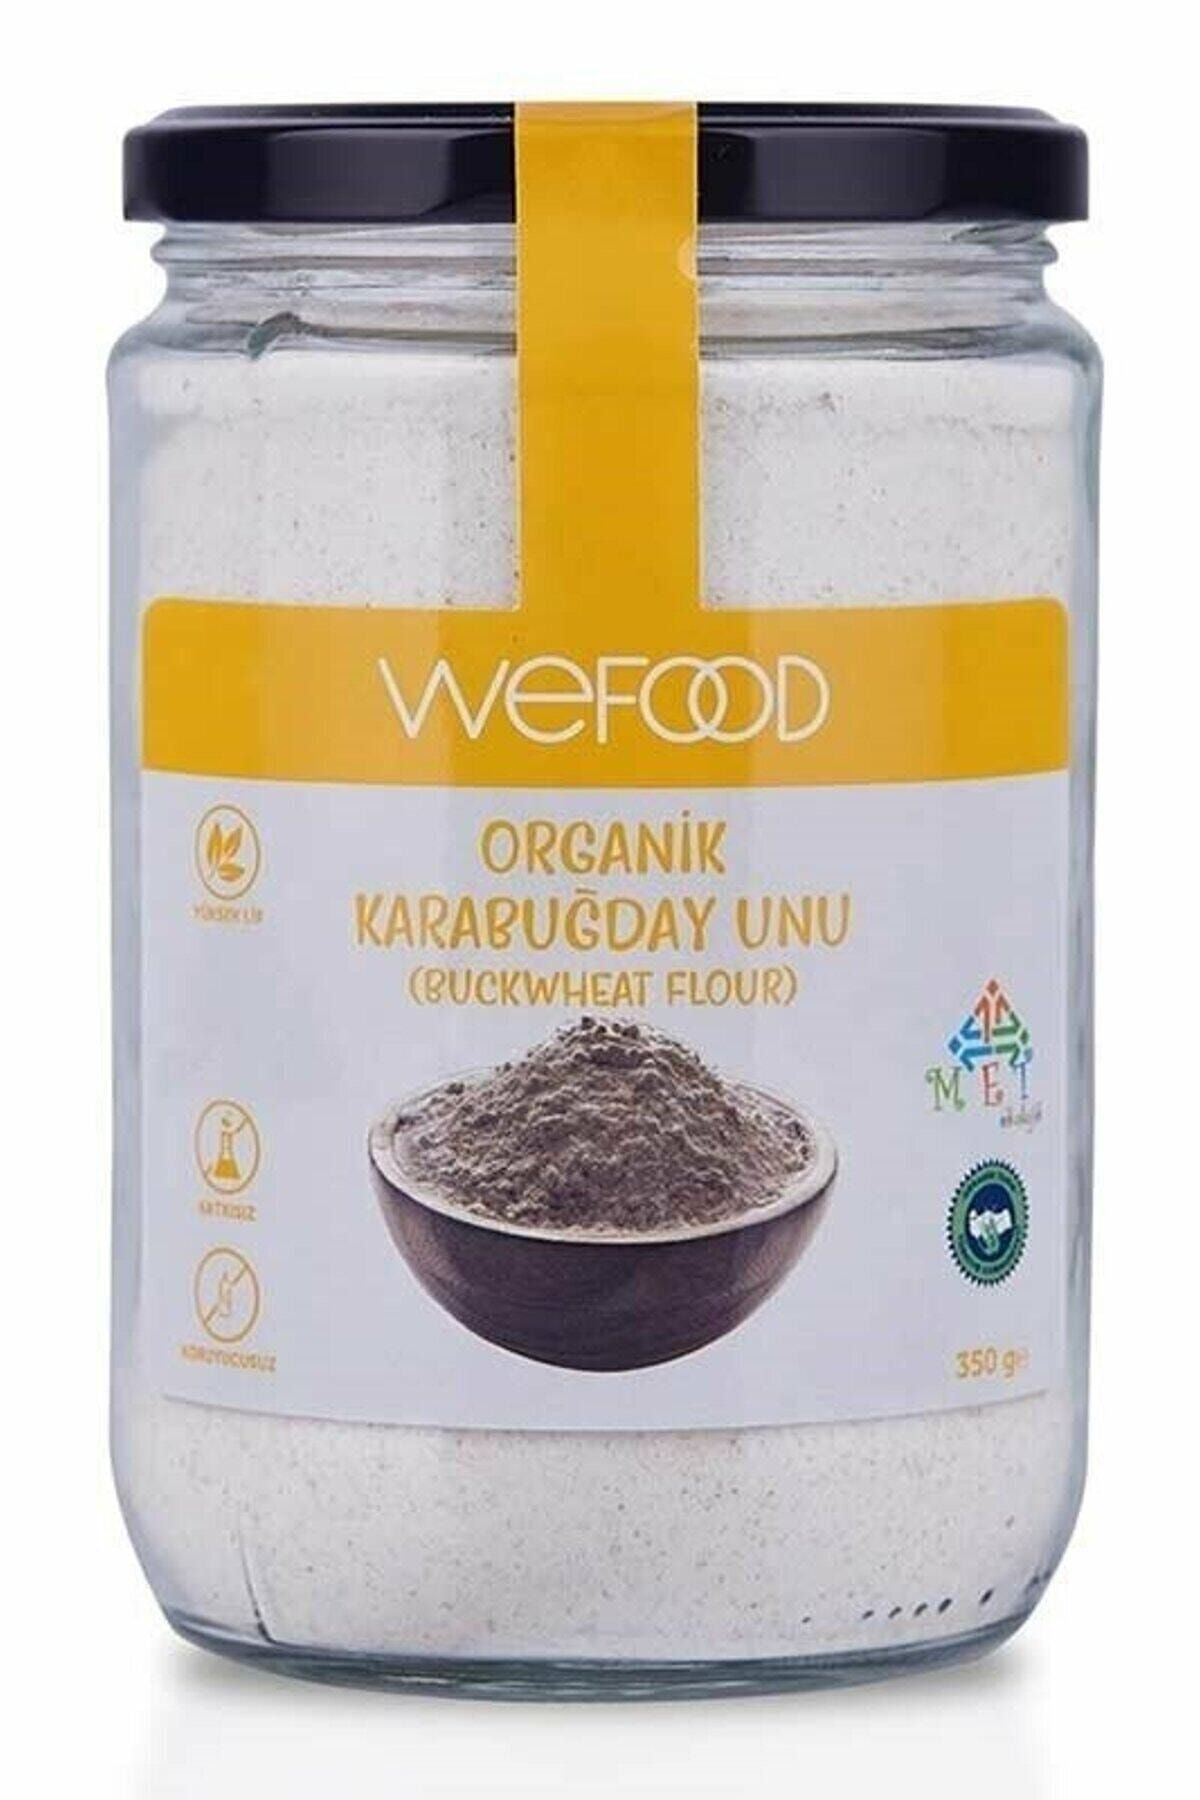 Wefood Organik Karabuğday Unu 350 gr